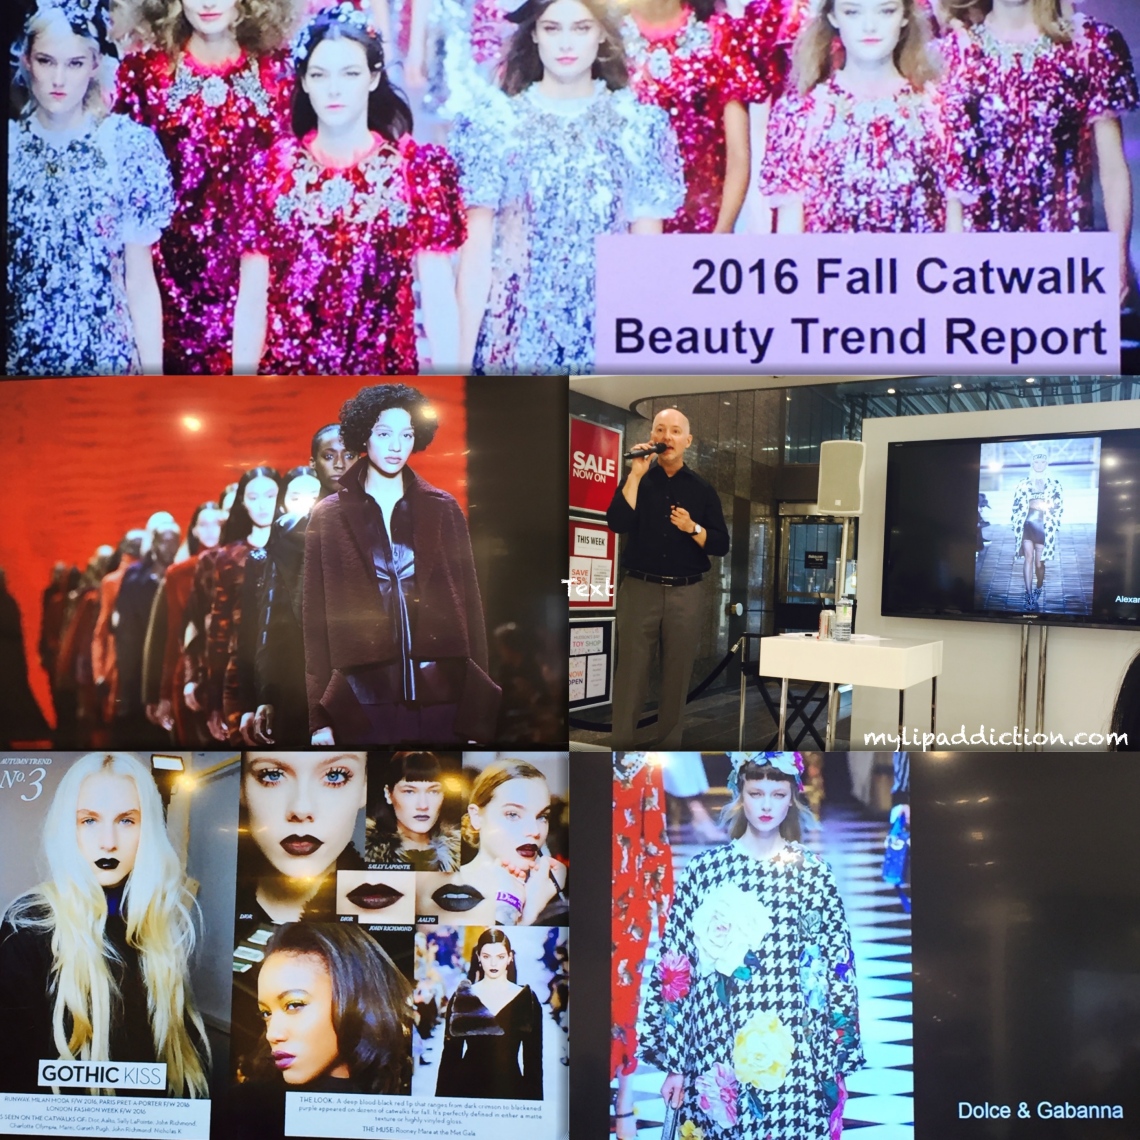 2016-fall-catwalk-beauty-trend-report-mylipaddiction-com